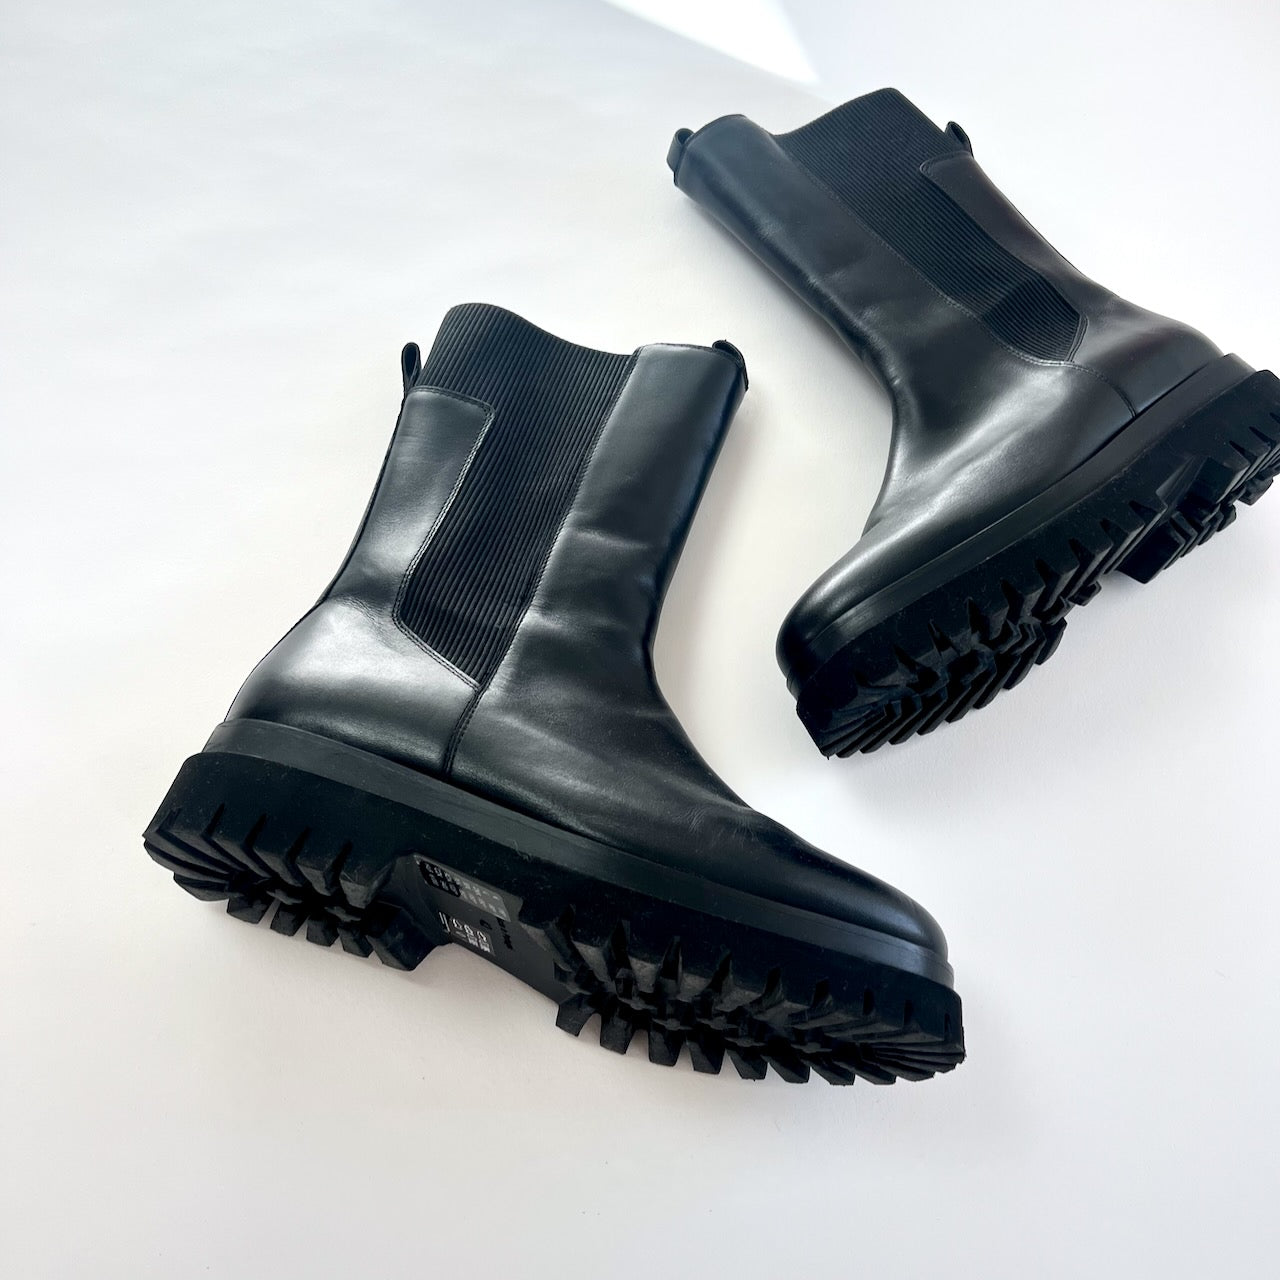 Cos black leather chelsea biker boots